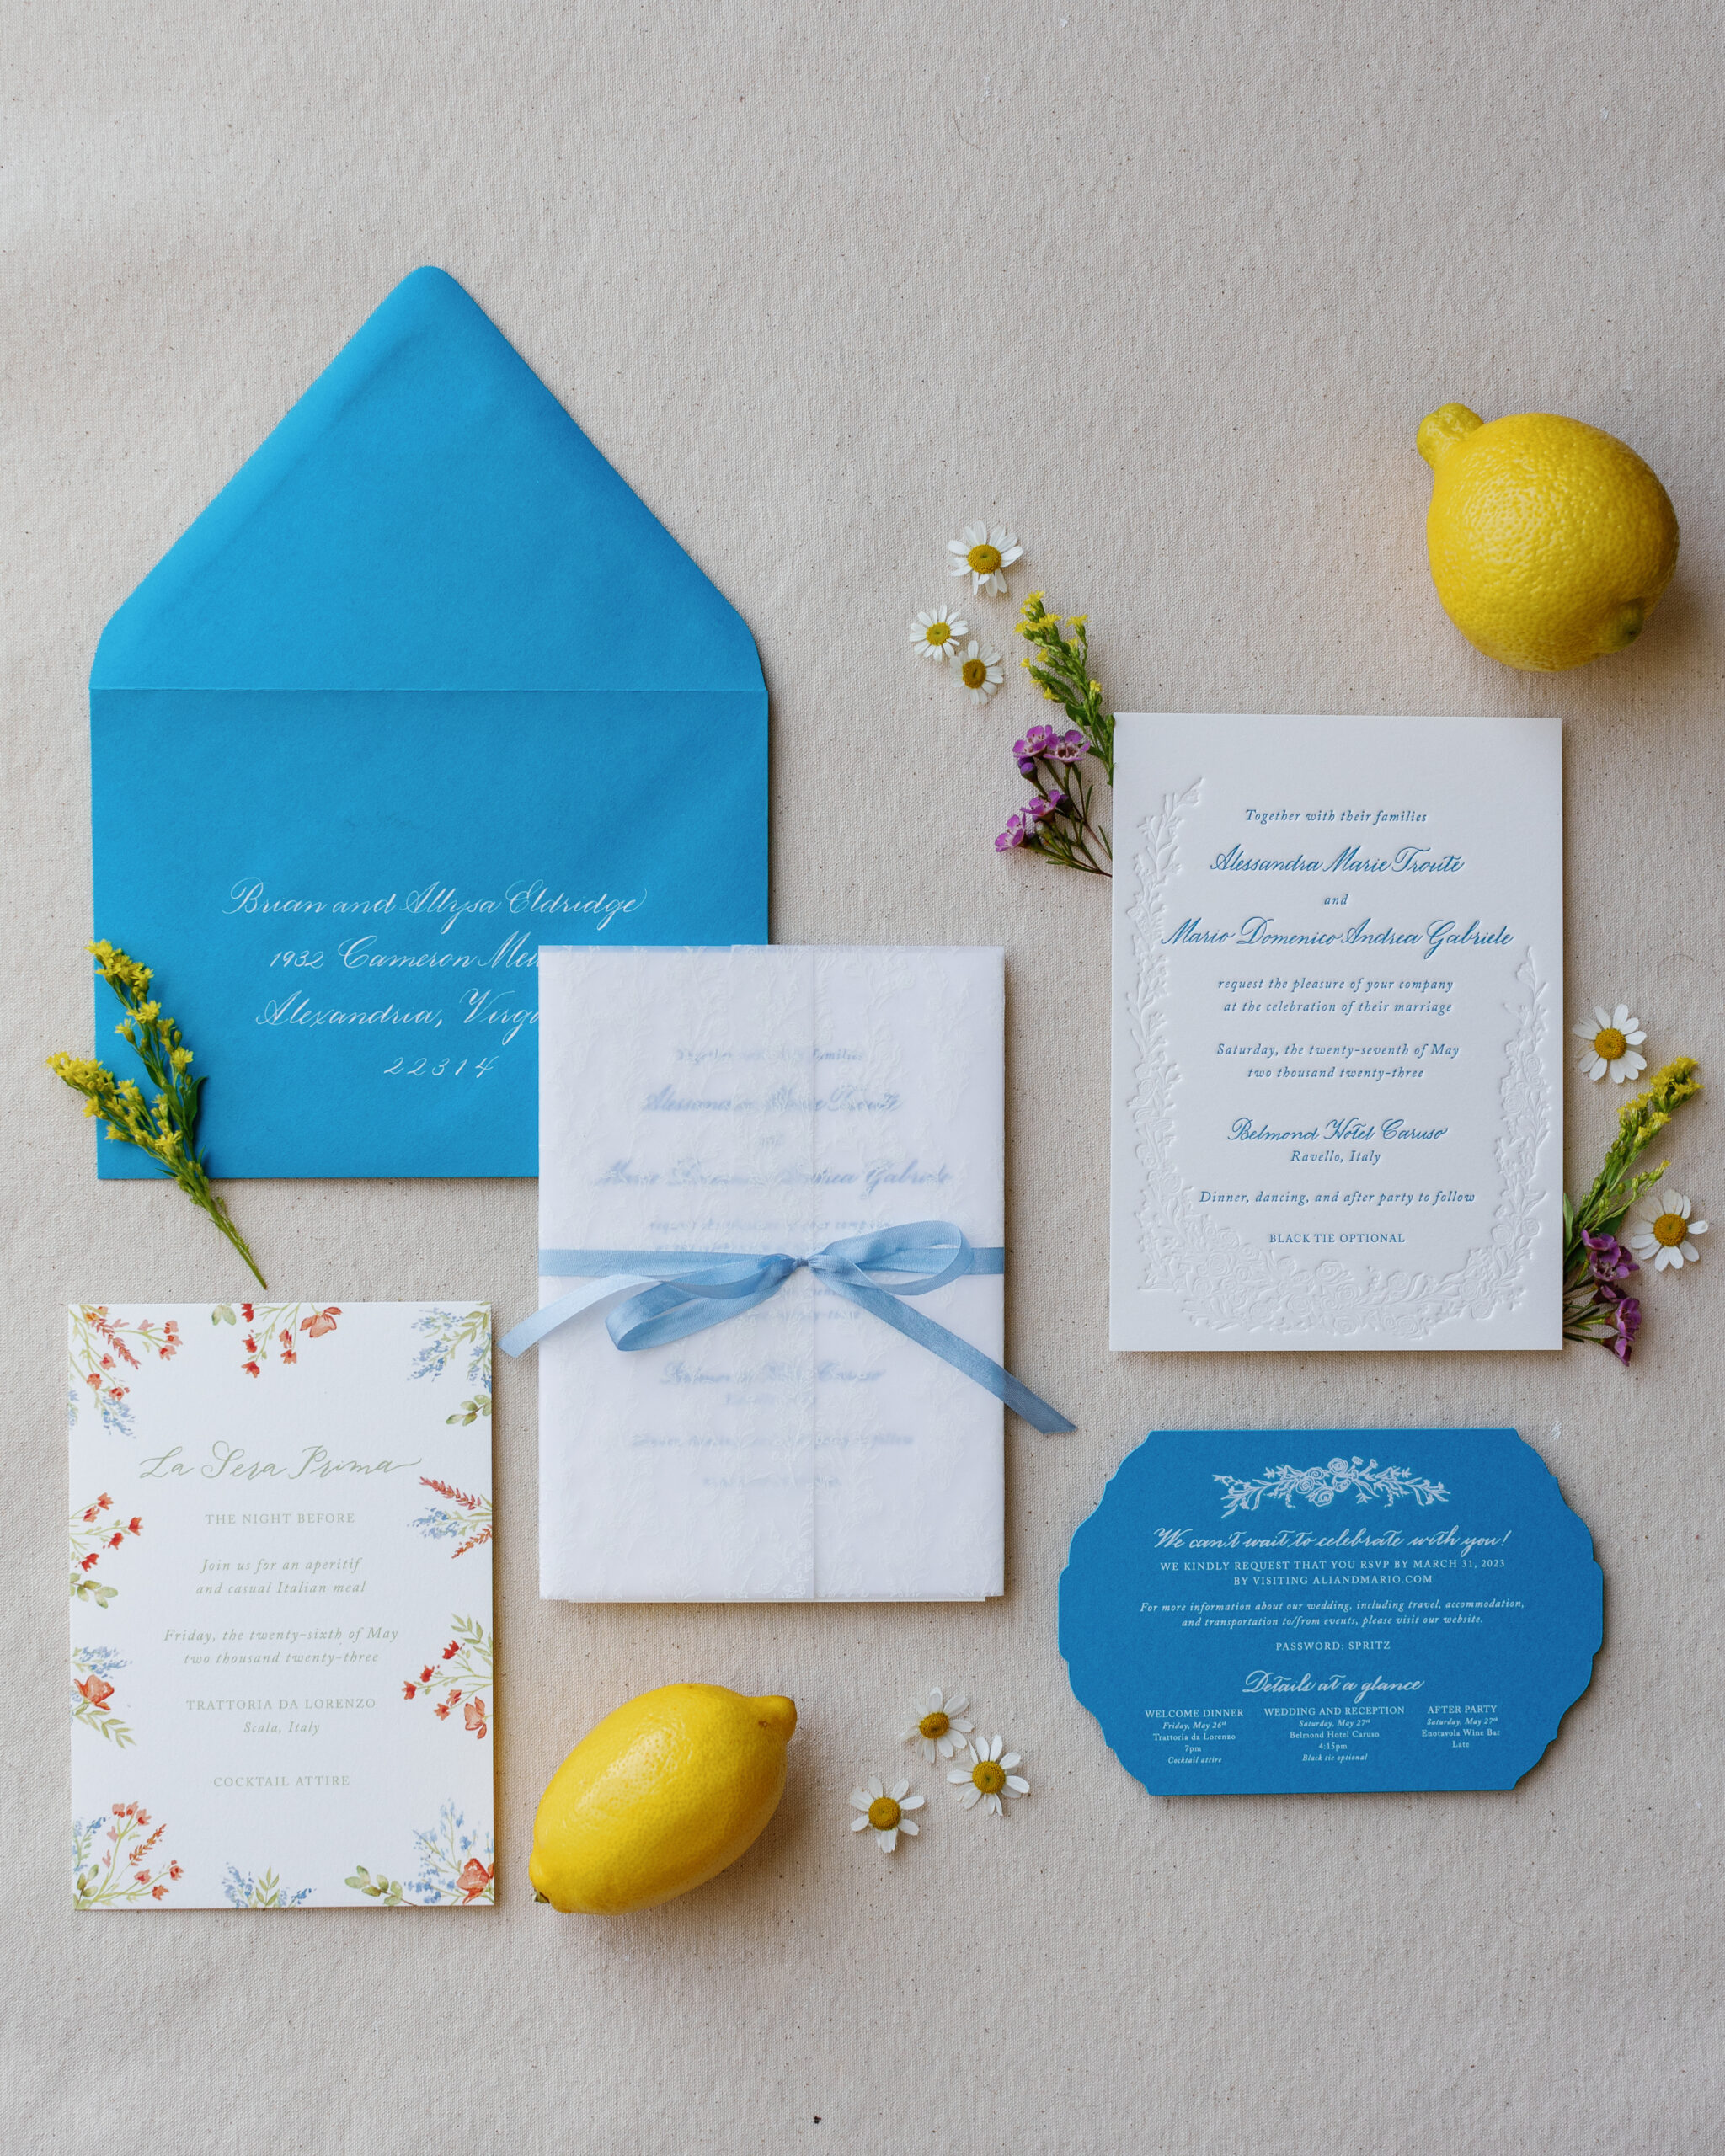 Cerulean blue and white custom wedding invitation for an Italian Destination Wedding.